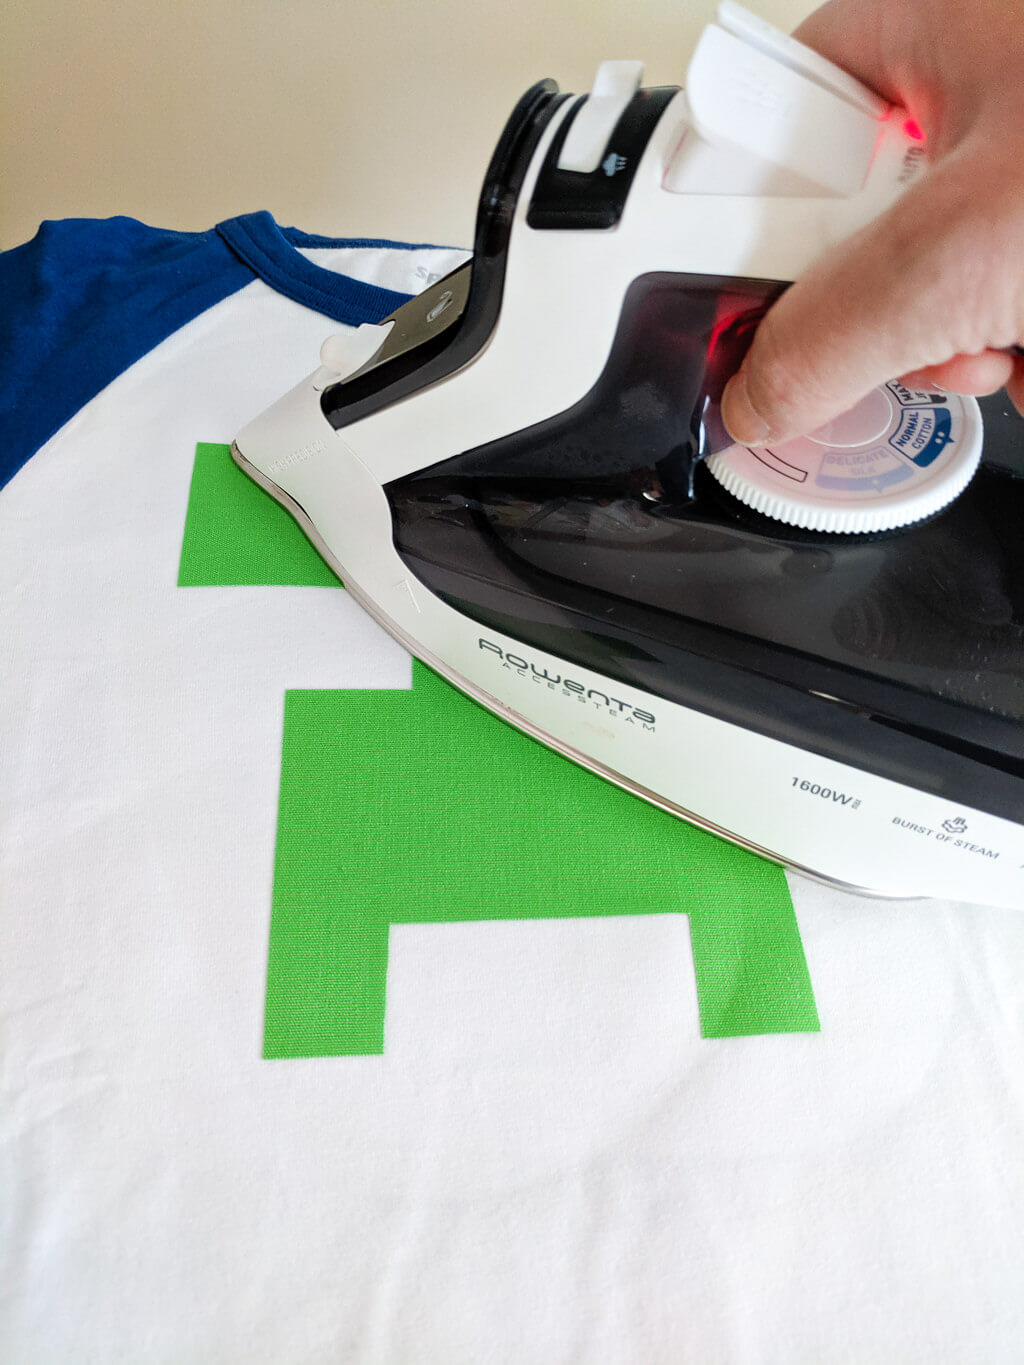 Ironing a DIY Minecraft t-shirt